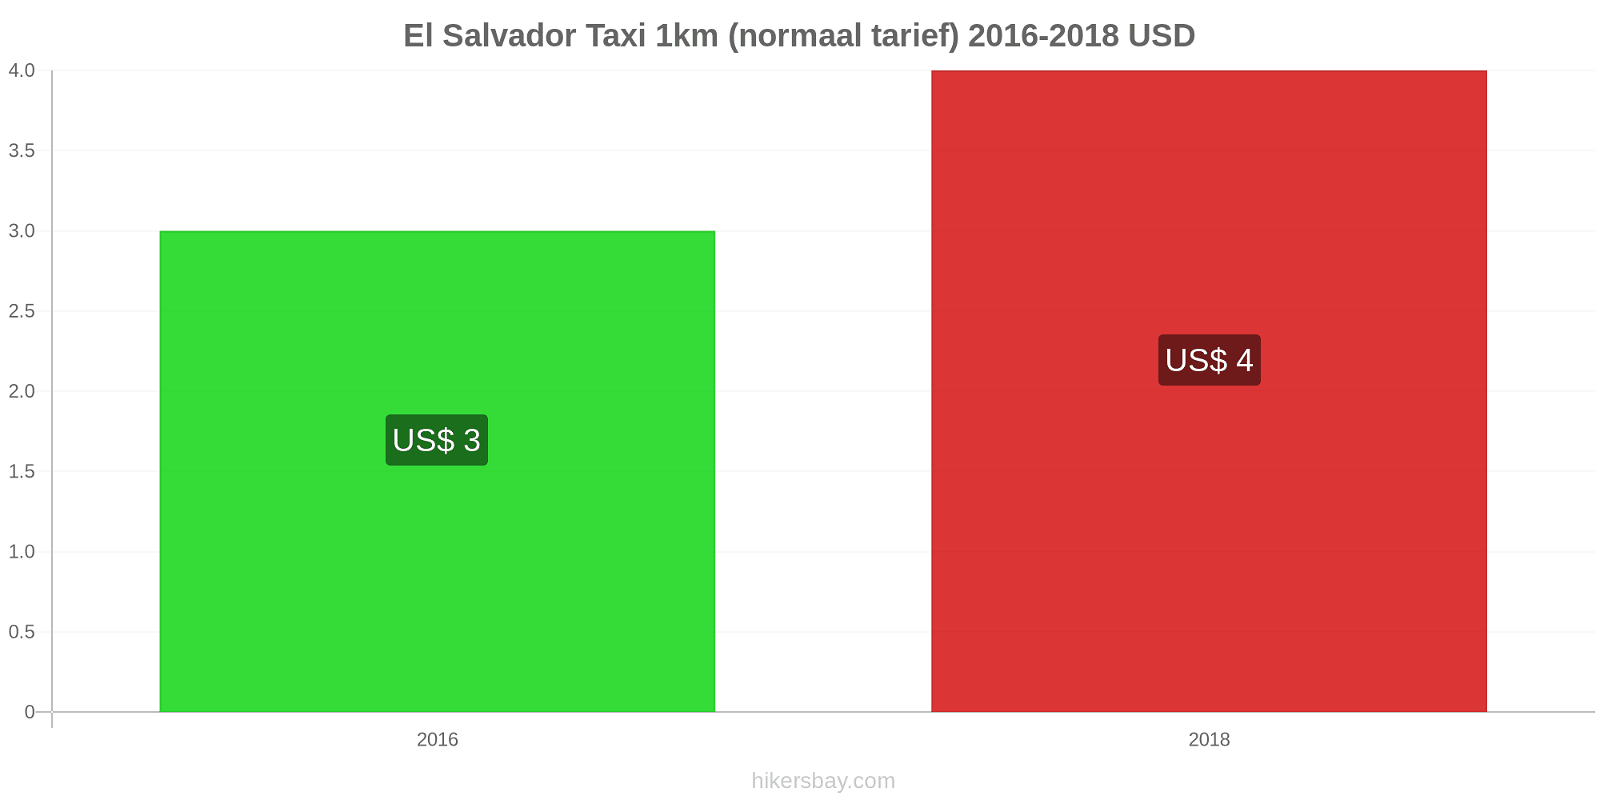 El Salvador prijswijzigingen Taxi 1km (normaal tarief) hikersbay.com